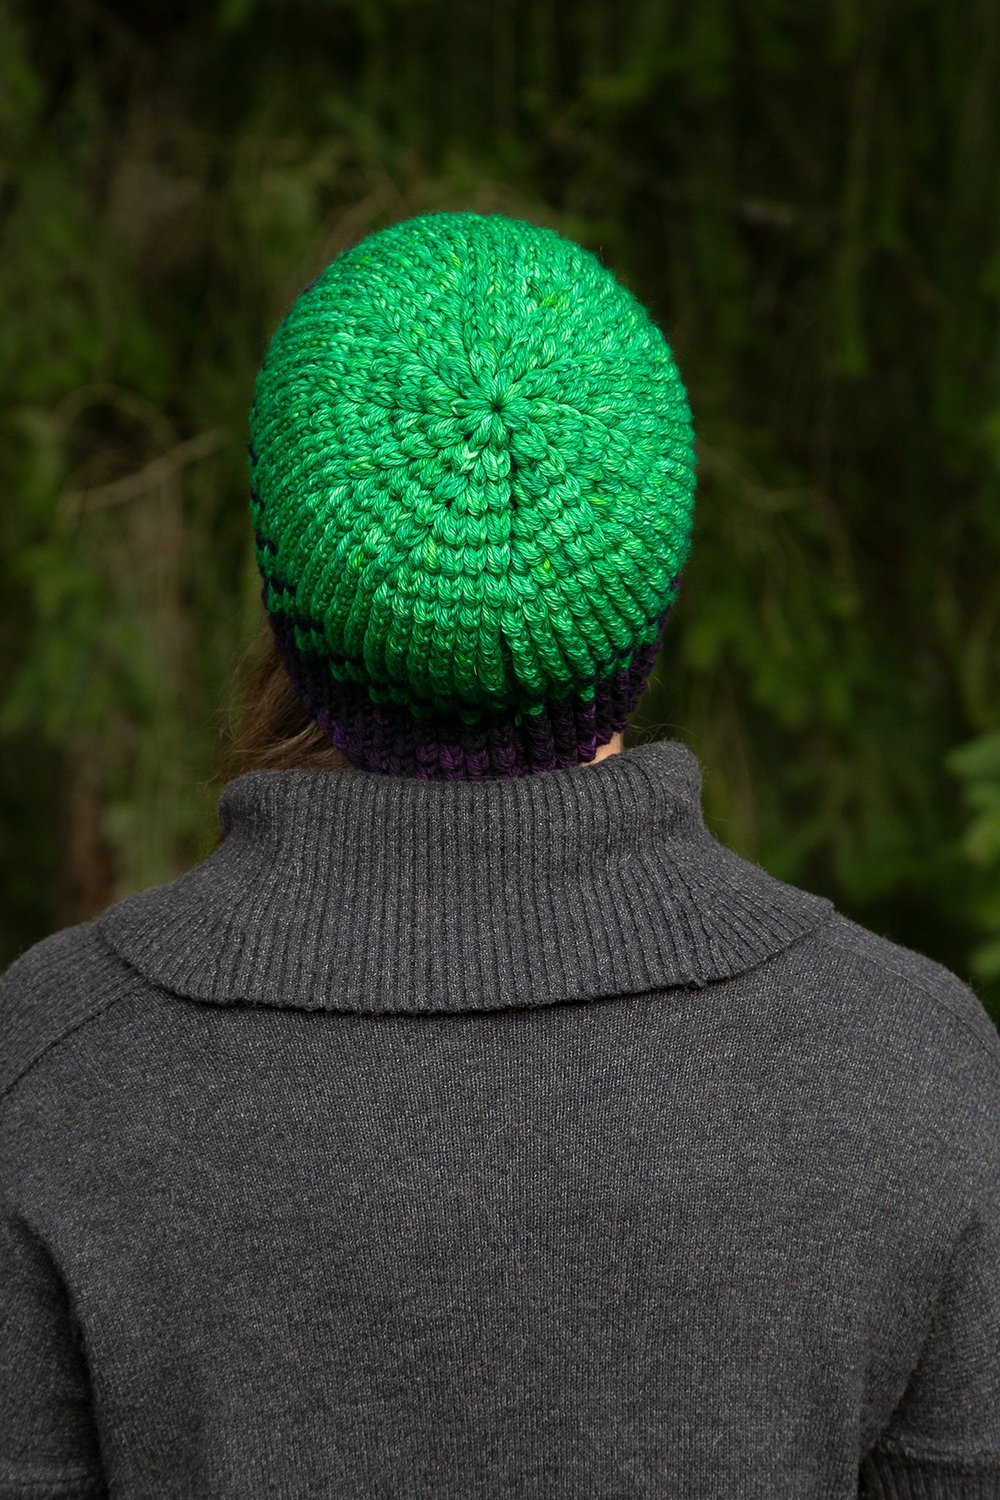 Green Knitting & Crochet Yarns